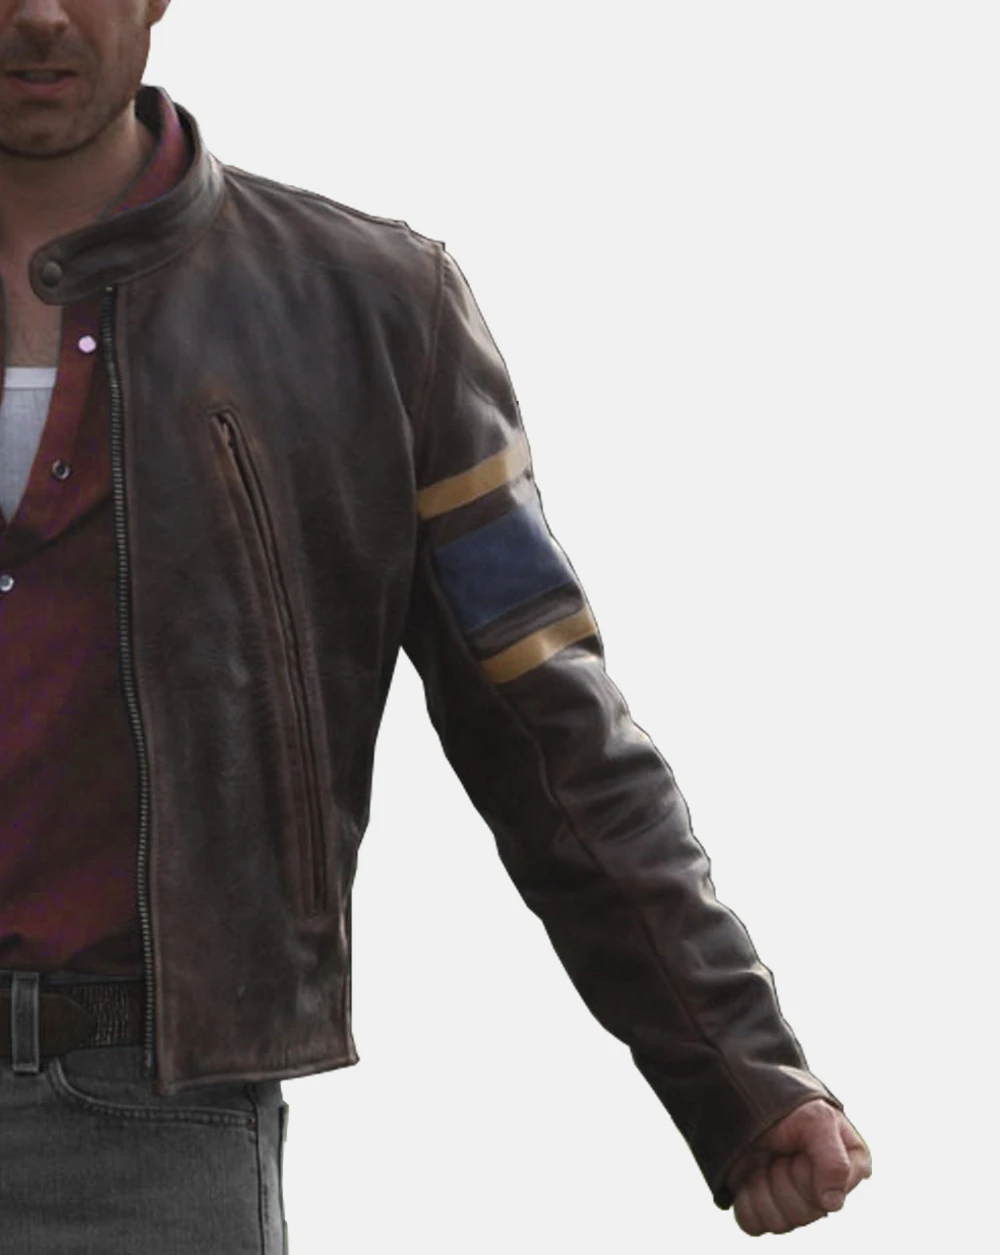 X Men Wolverine Leather Jacket